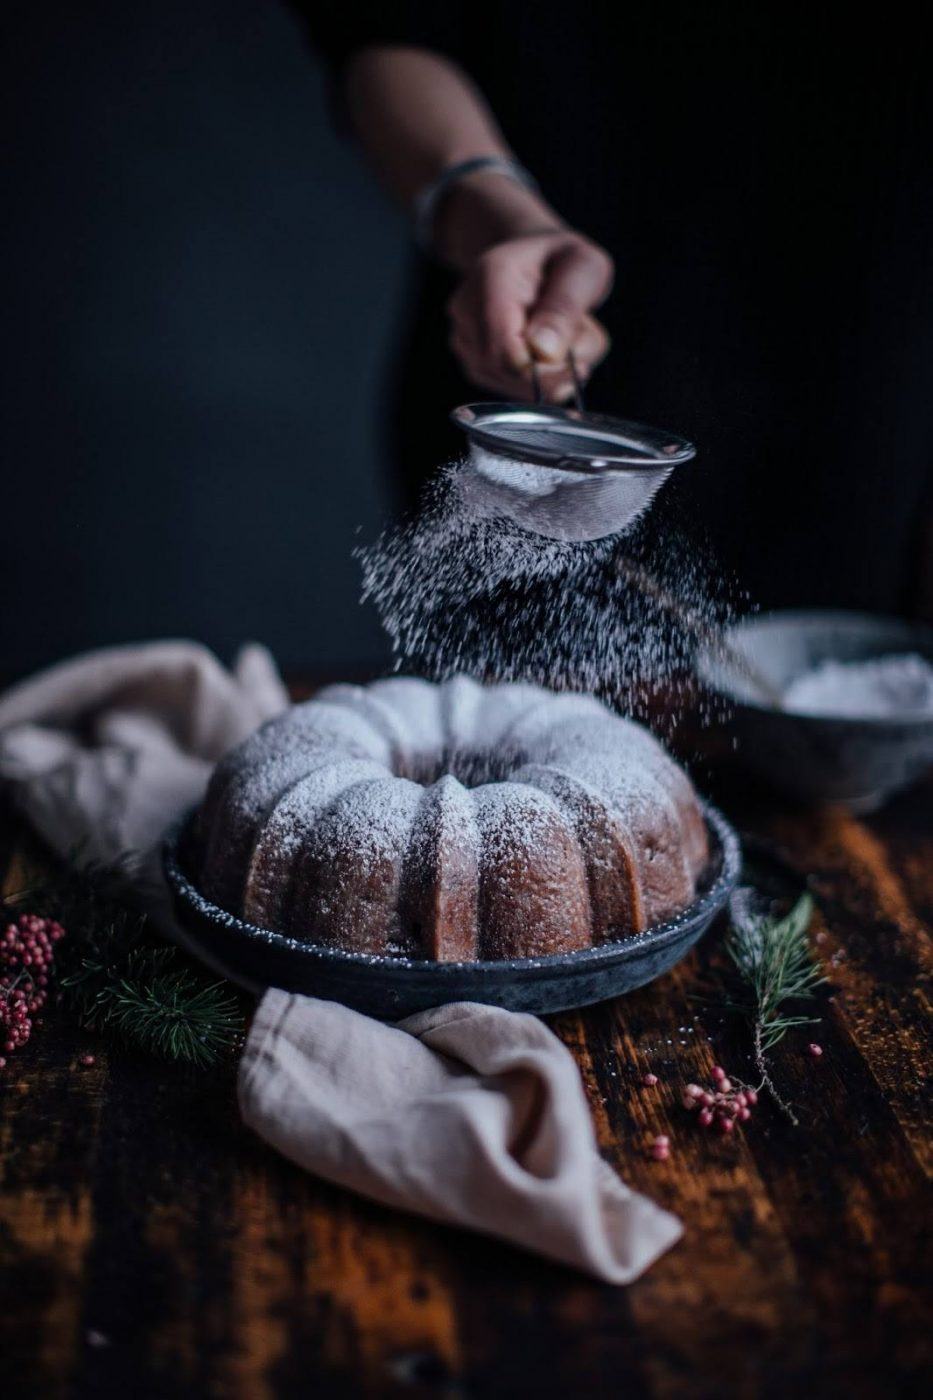 Image for Gluten-free Christmas “Stollen” – Bundt Cake